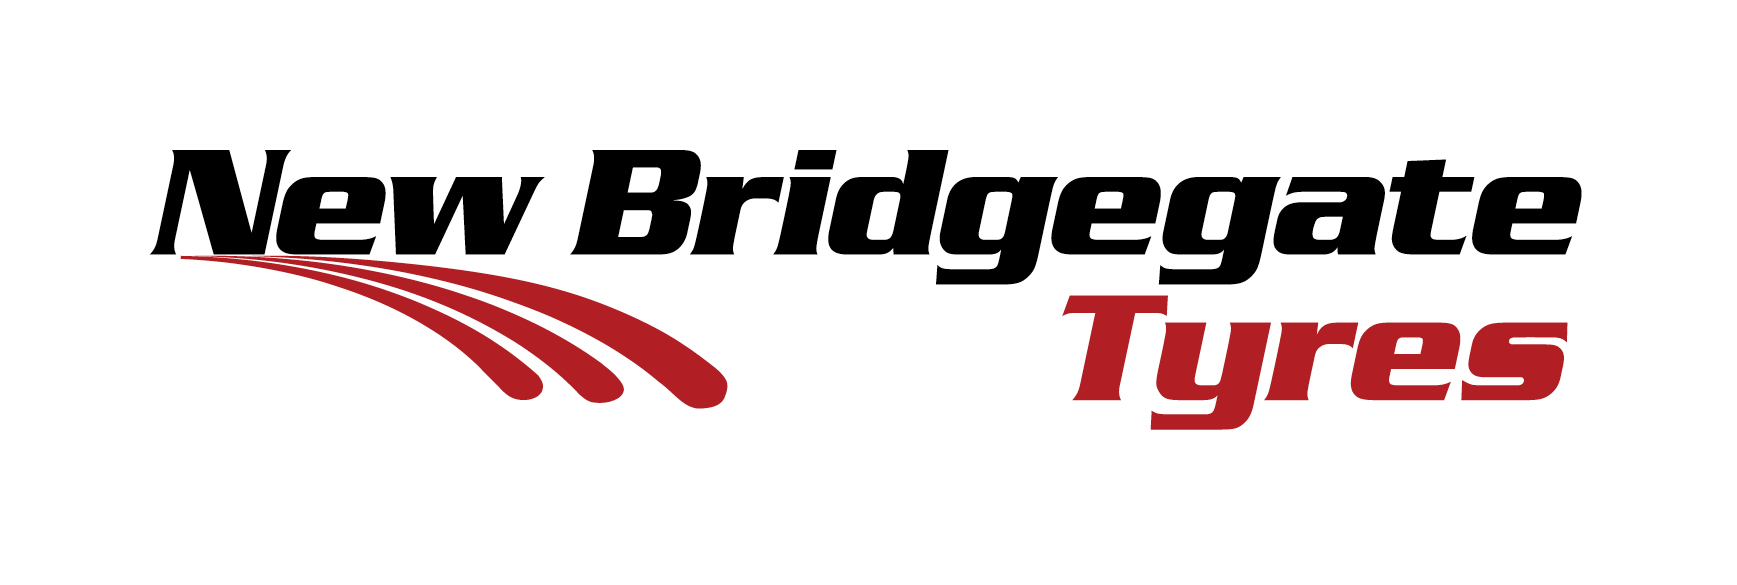 New Bridgegate Tyres Ltd